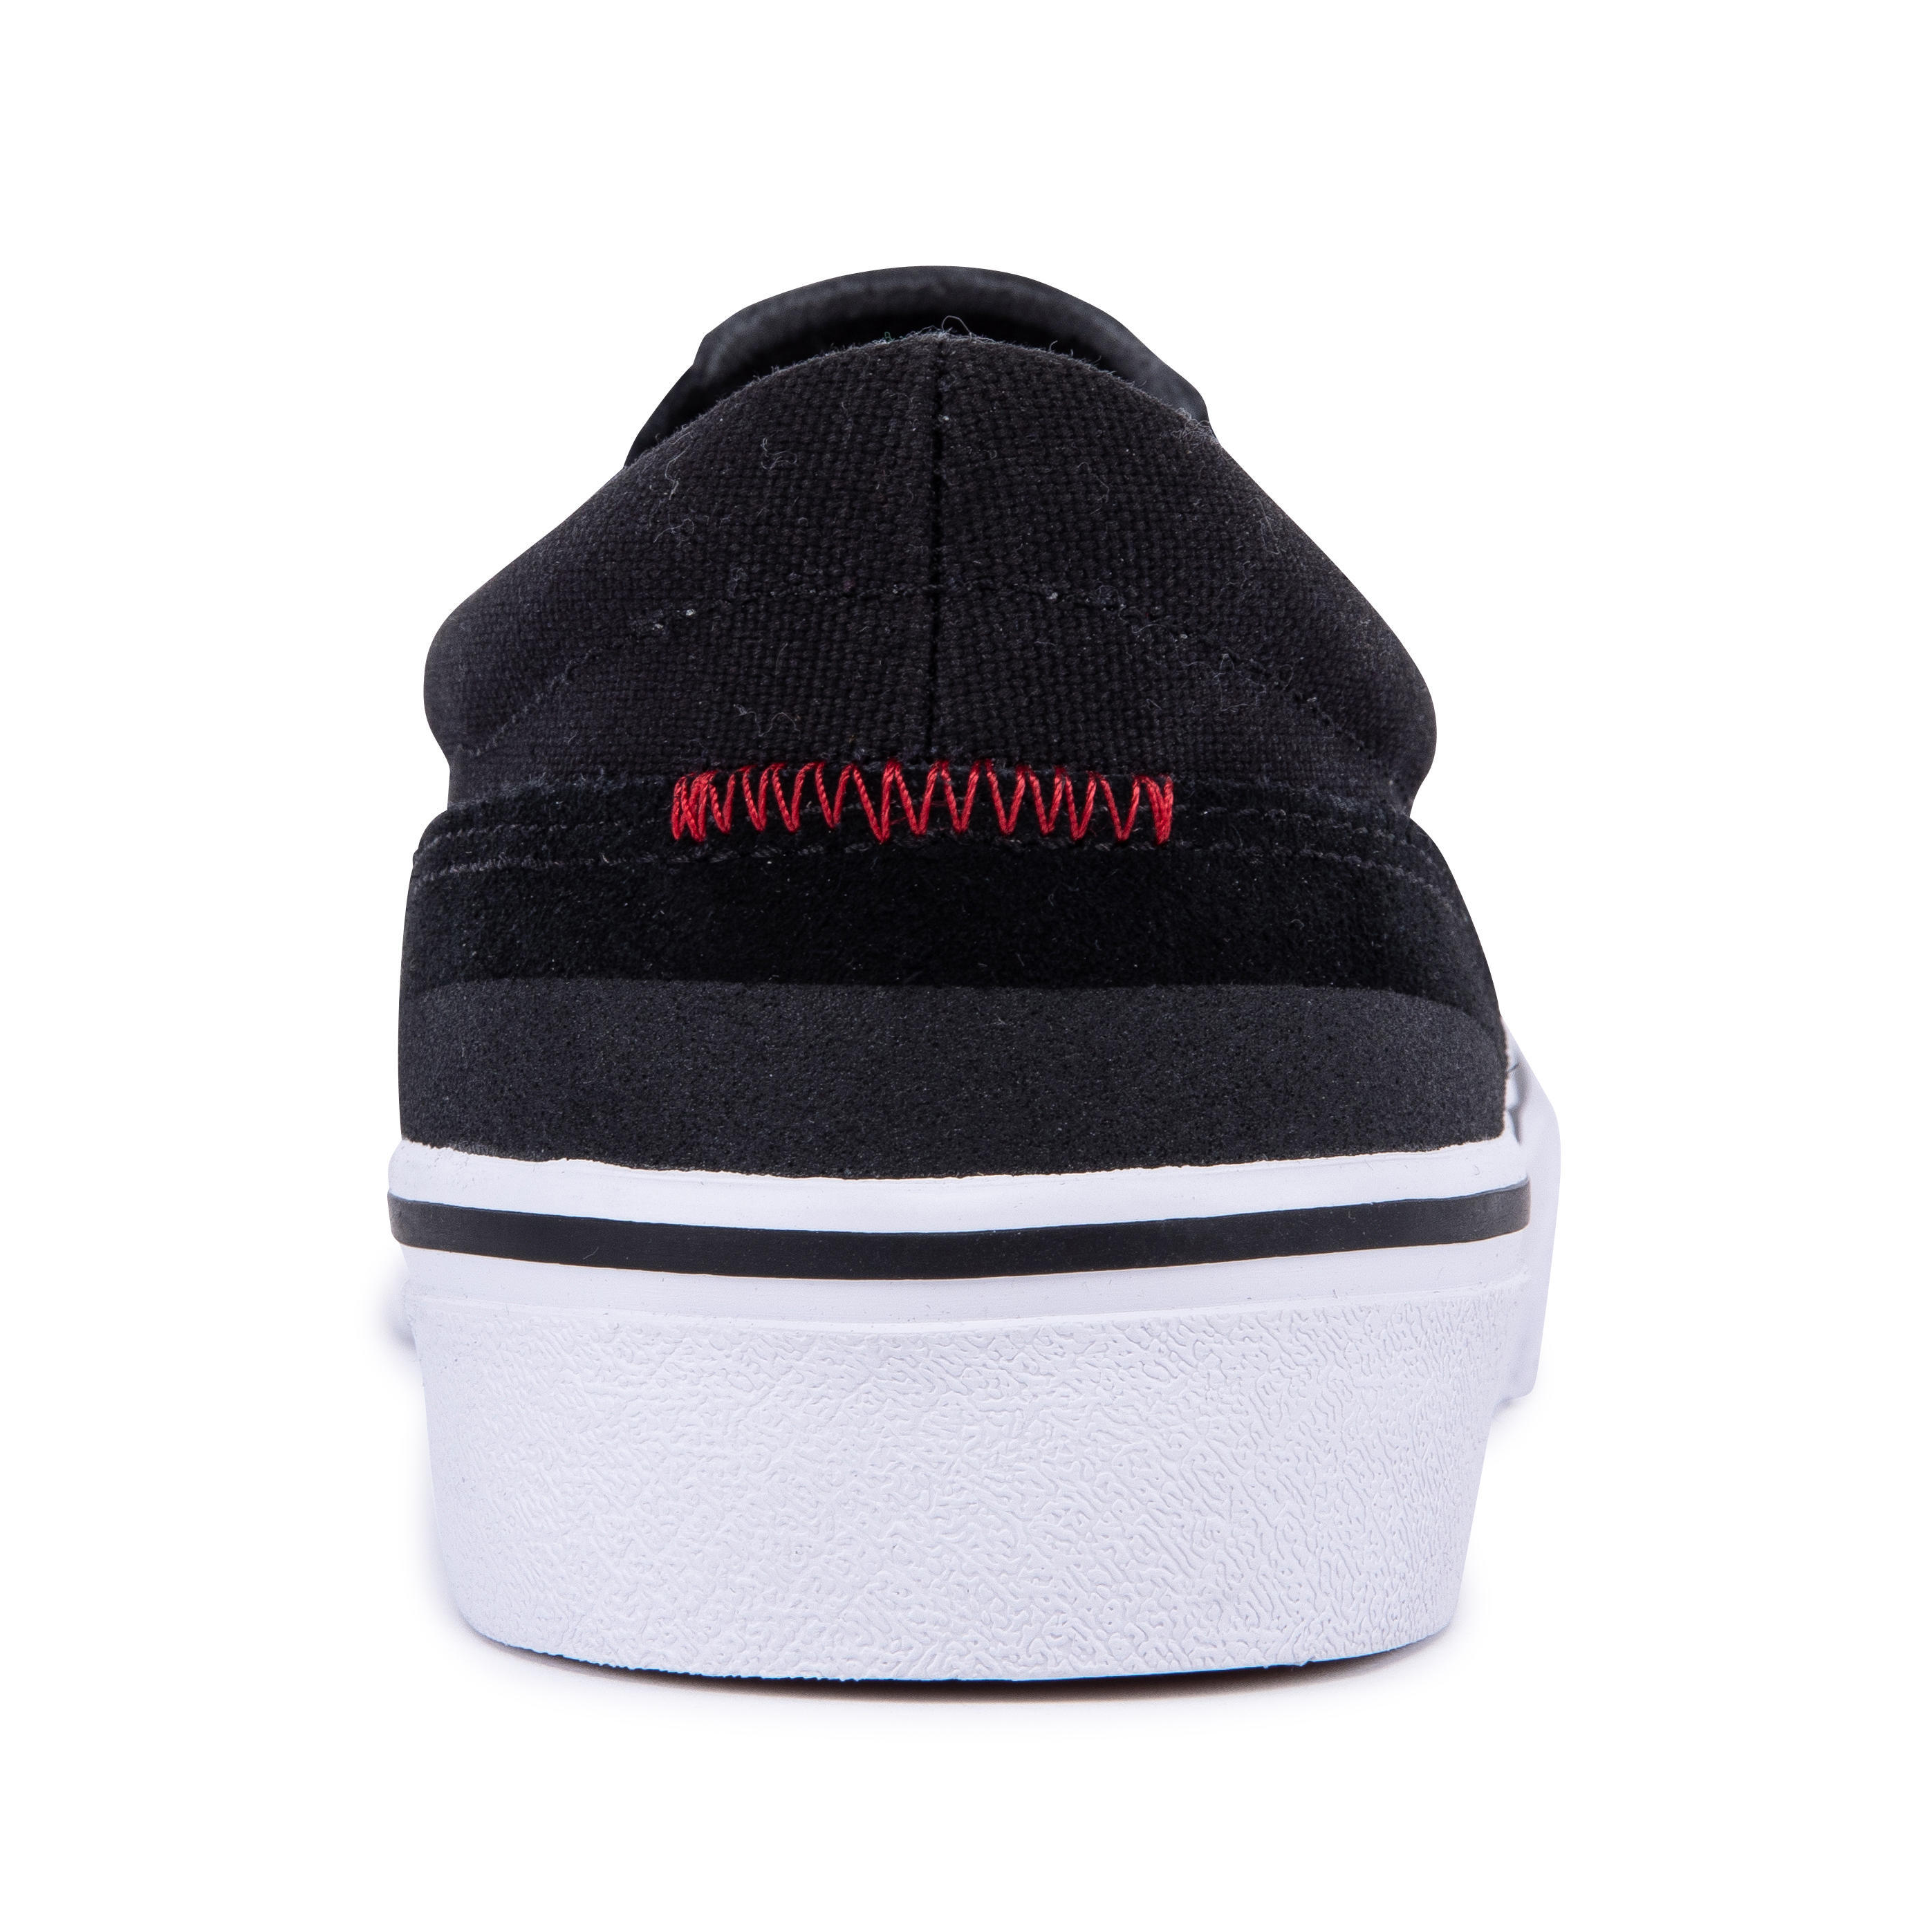 Vulca 500 Adult Low-Top Slip-On Skate Shoes - Black/White 4/12